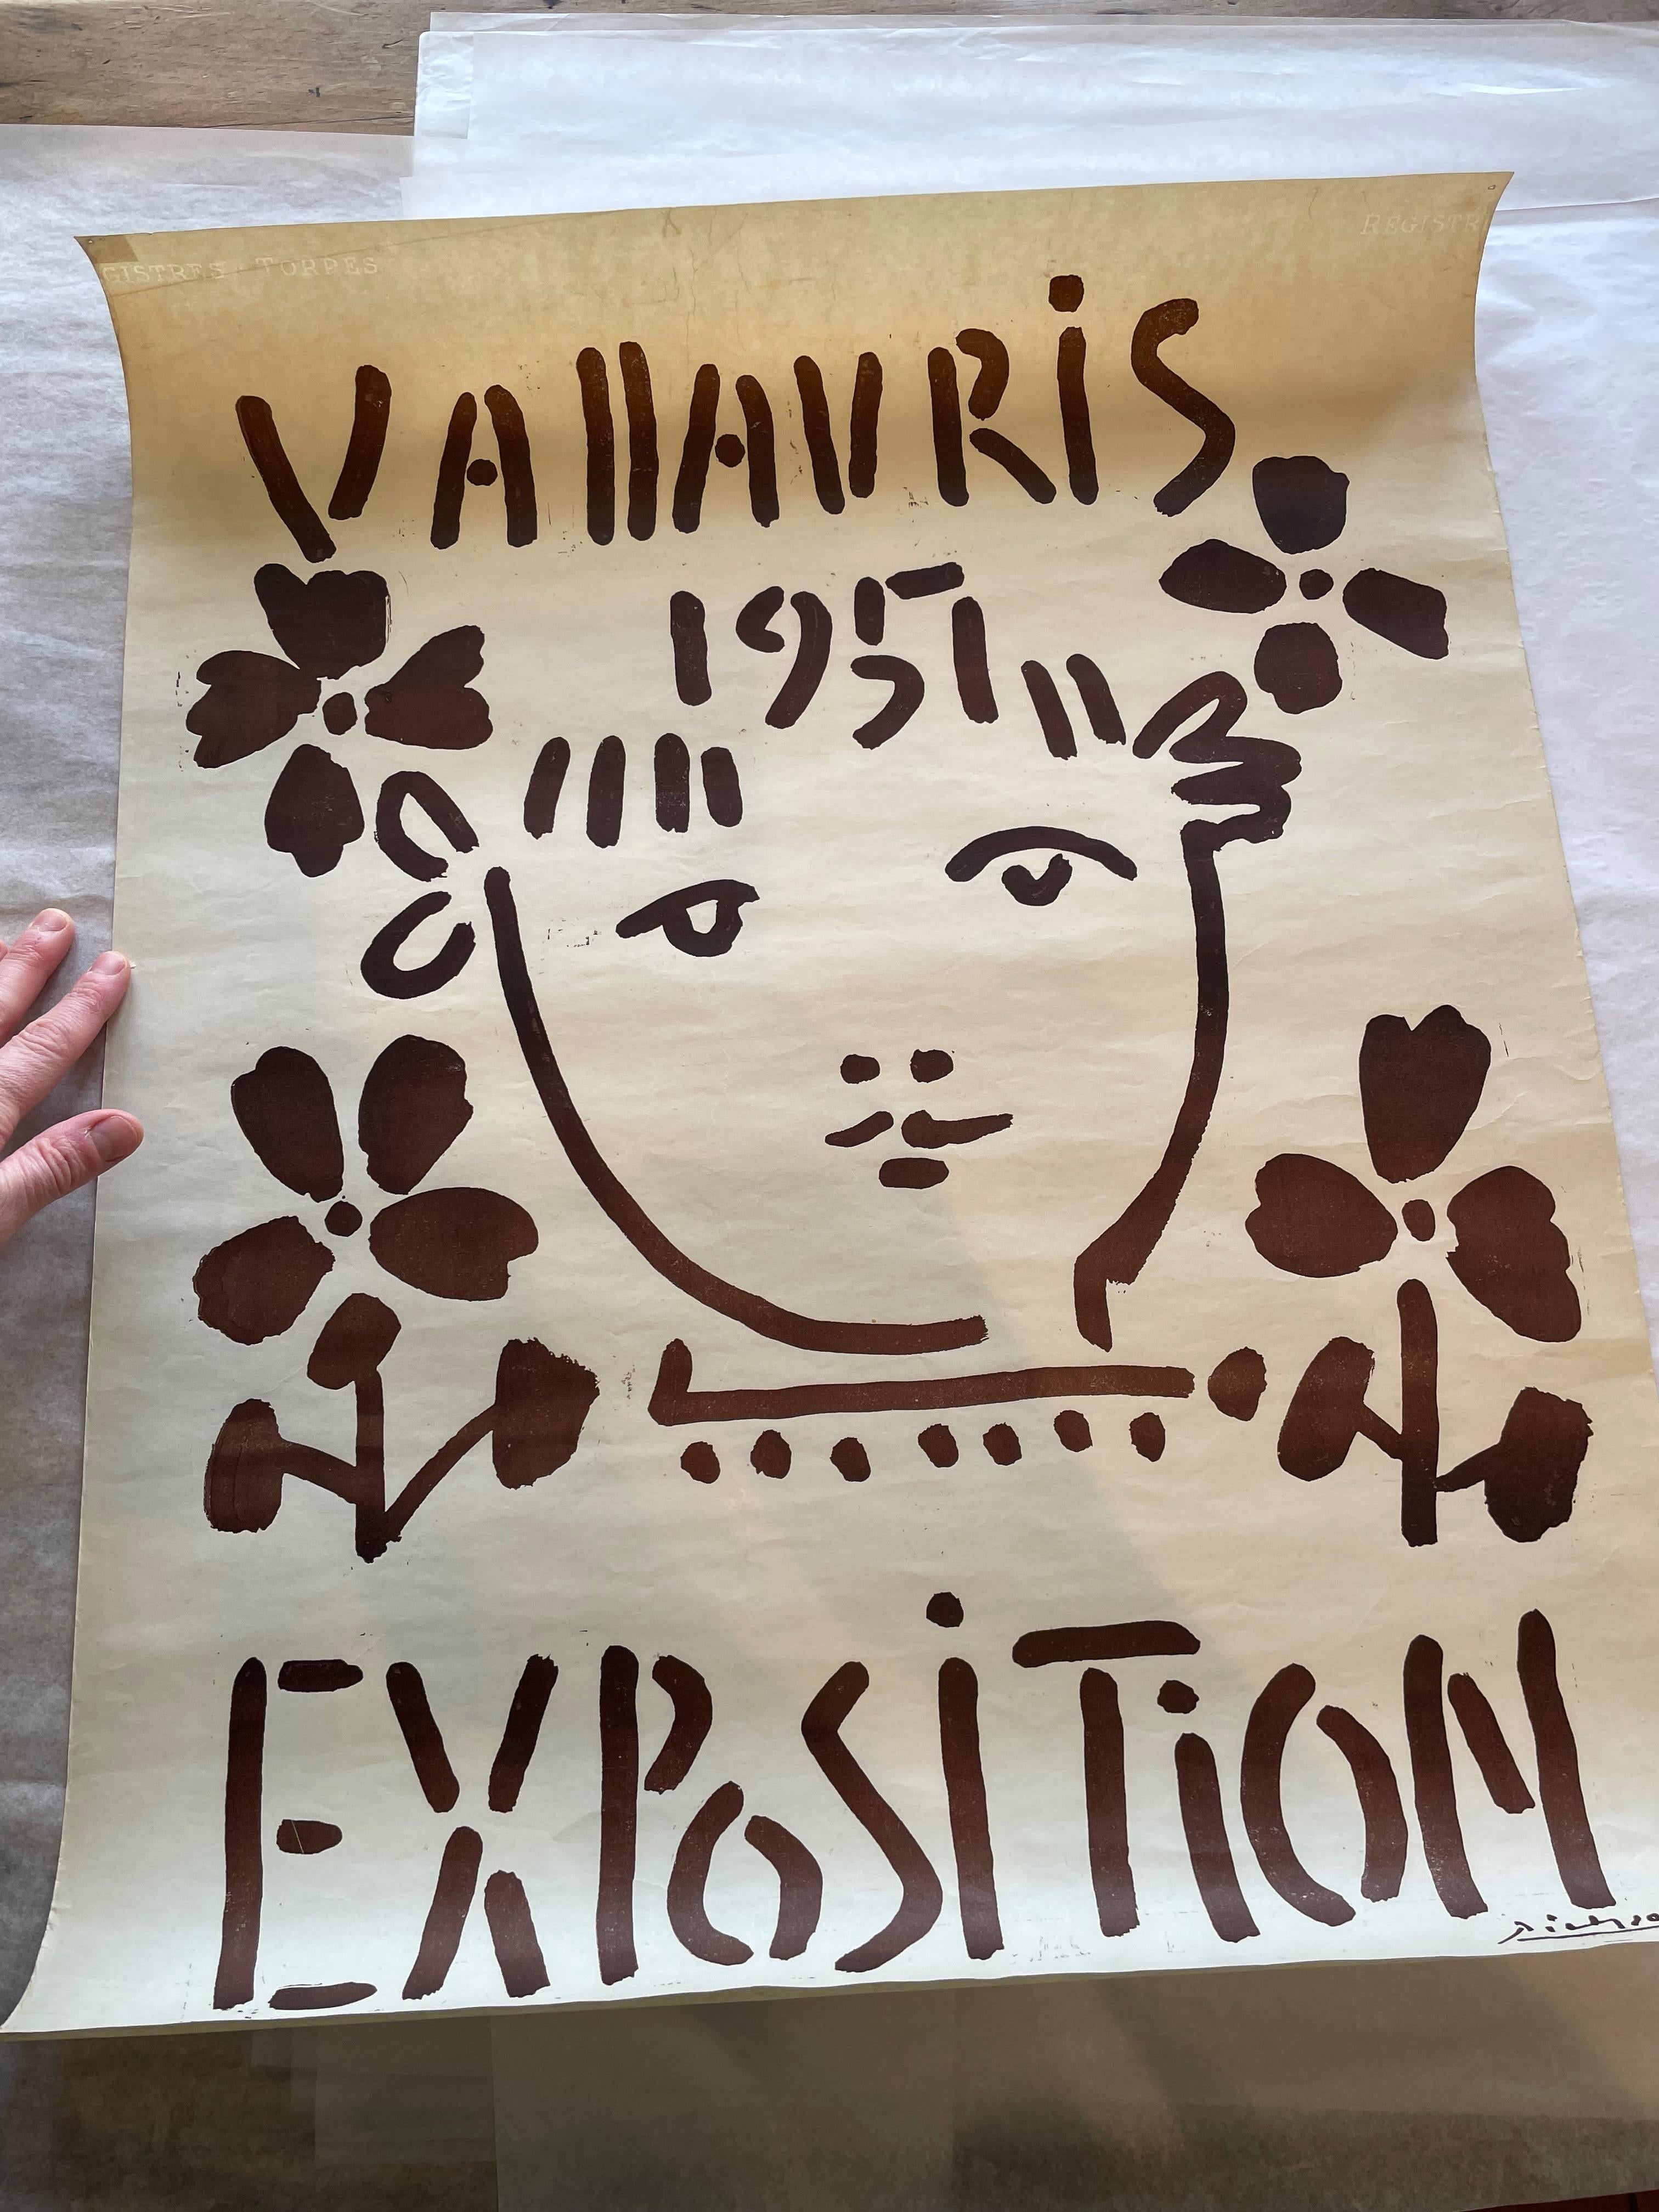 Artist: Pablo Picasso

Title: Vallauris 1951 Exposition, 1951

Date: 1951

Medium: Linocut

Printer: Hidalgo Arnera

Size: 65 x 50 cm

Signed: In plate.